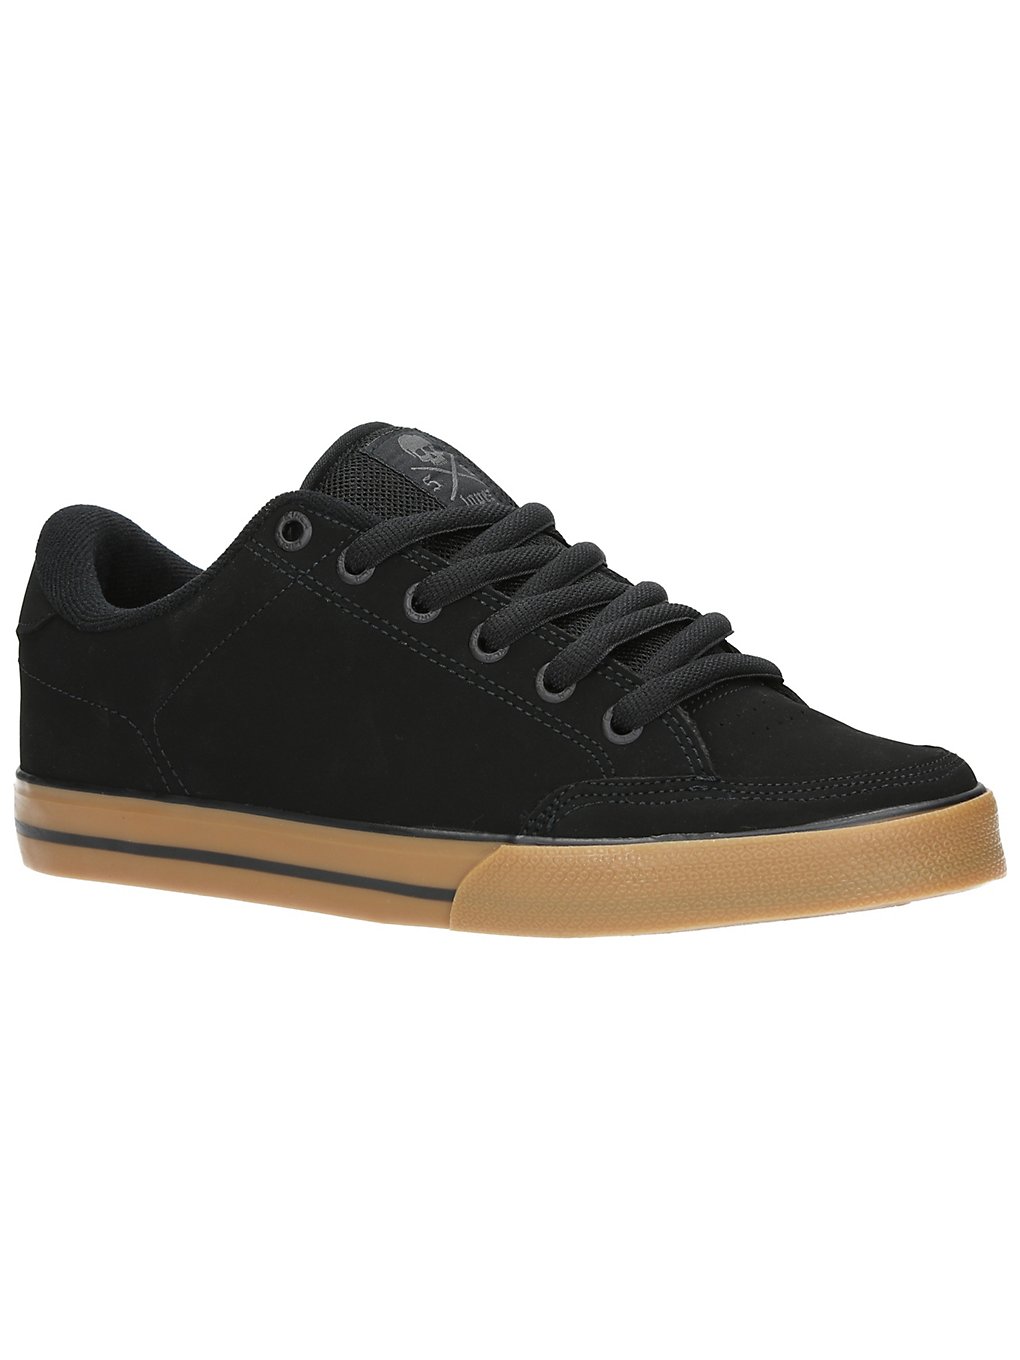 Circa AL 50 Skate Shoes black/gum